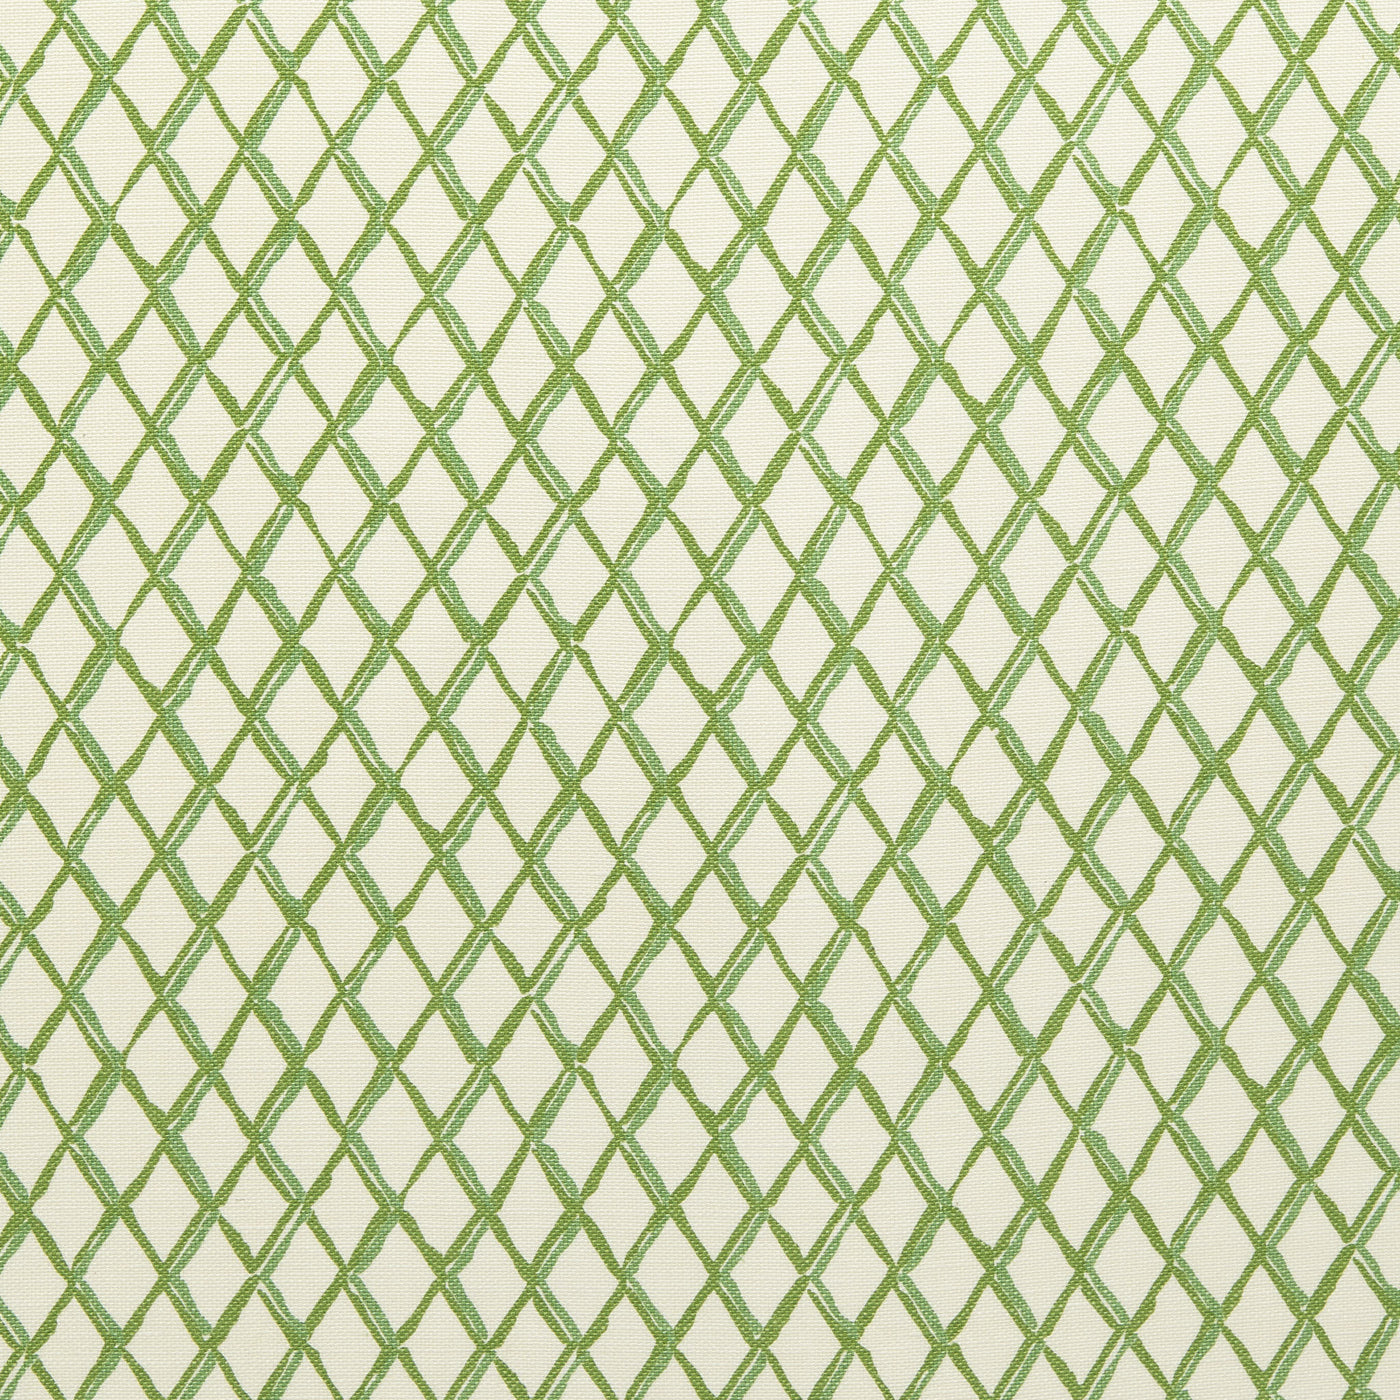 Lexington Fabric in Moss